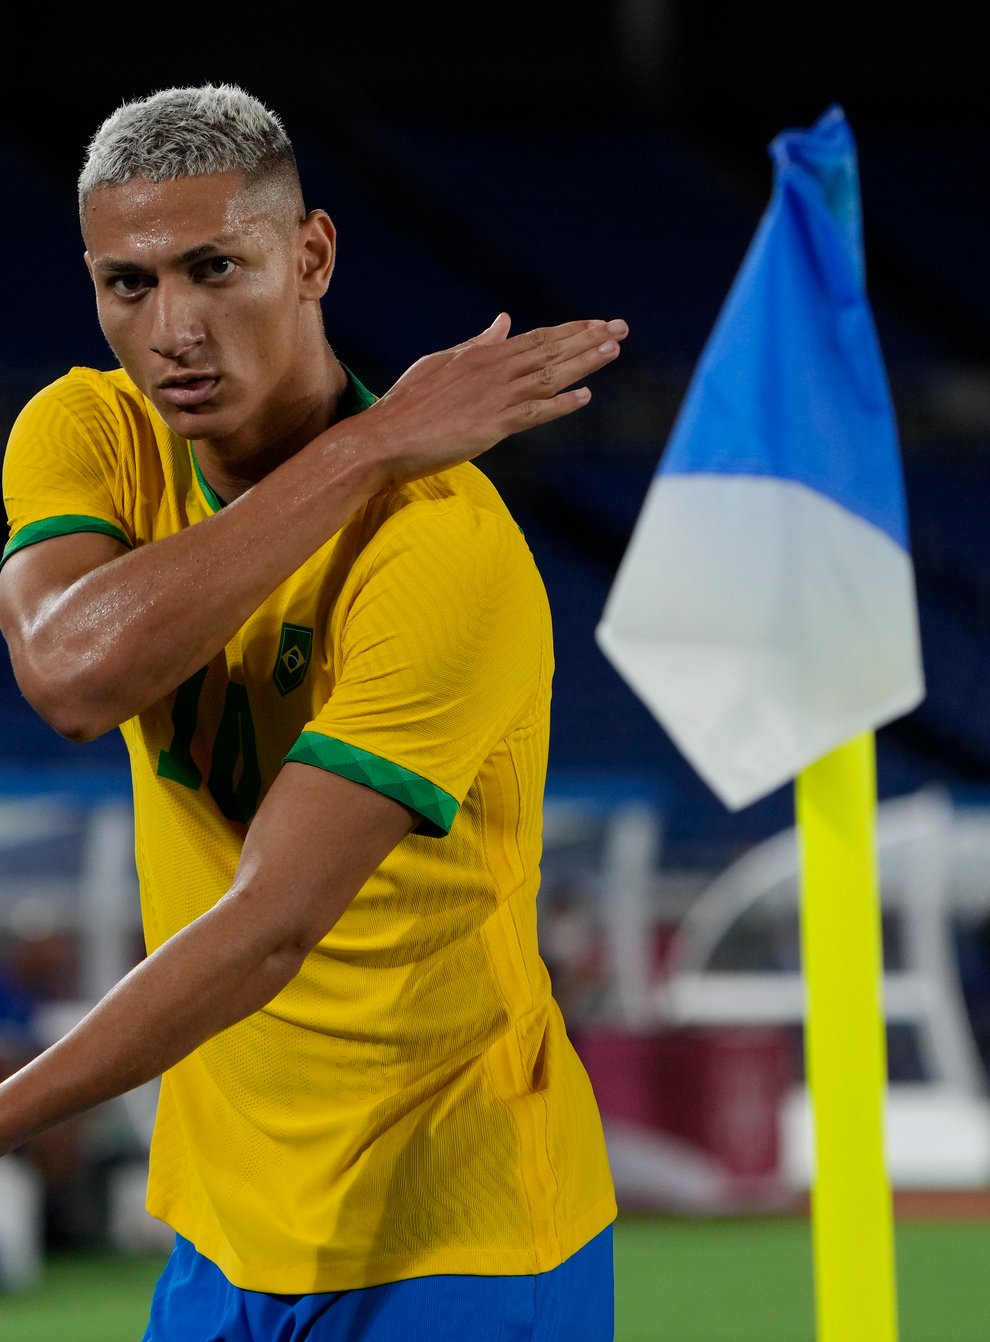 Brazil’s Richarlison scored a first-half hat-trick against Germany (Kiichiro Sato/AP)